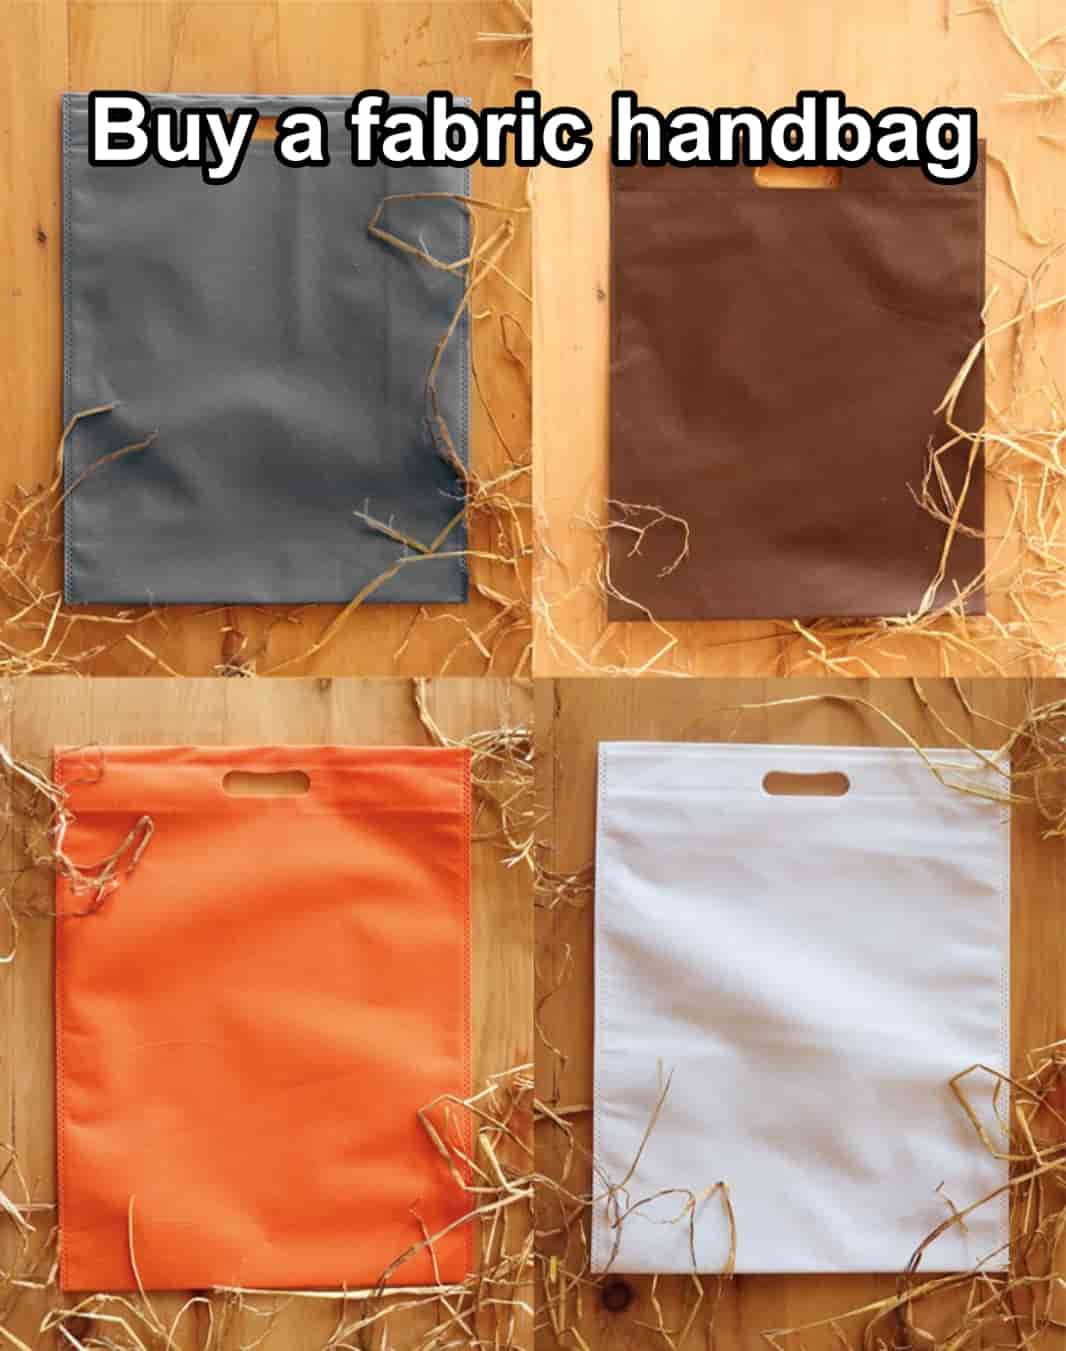 Buy a fabric handbag